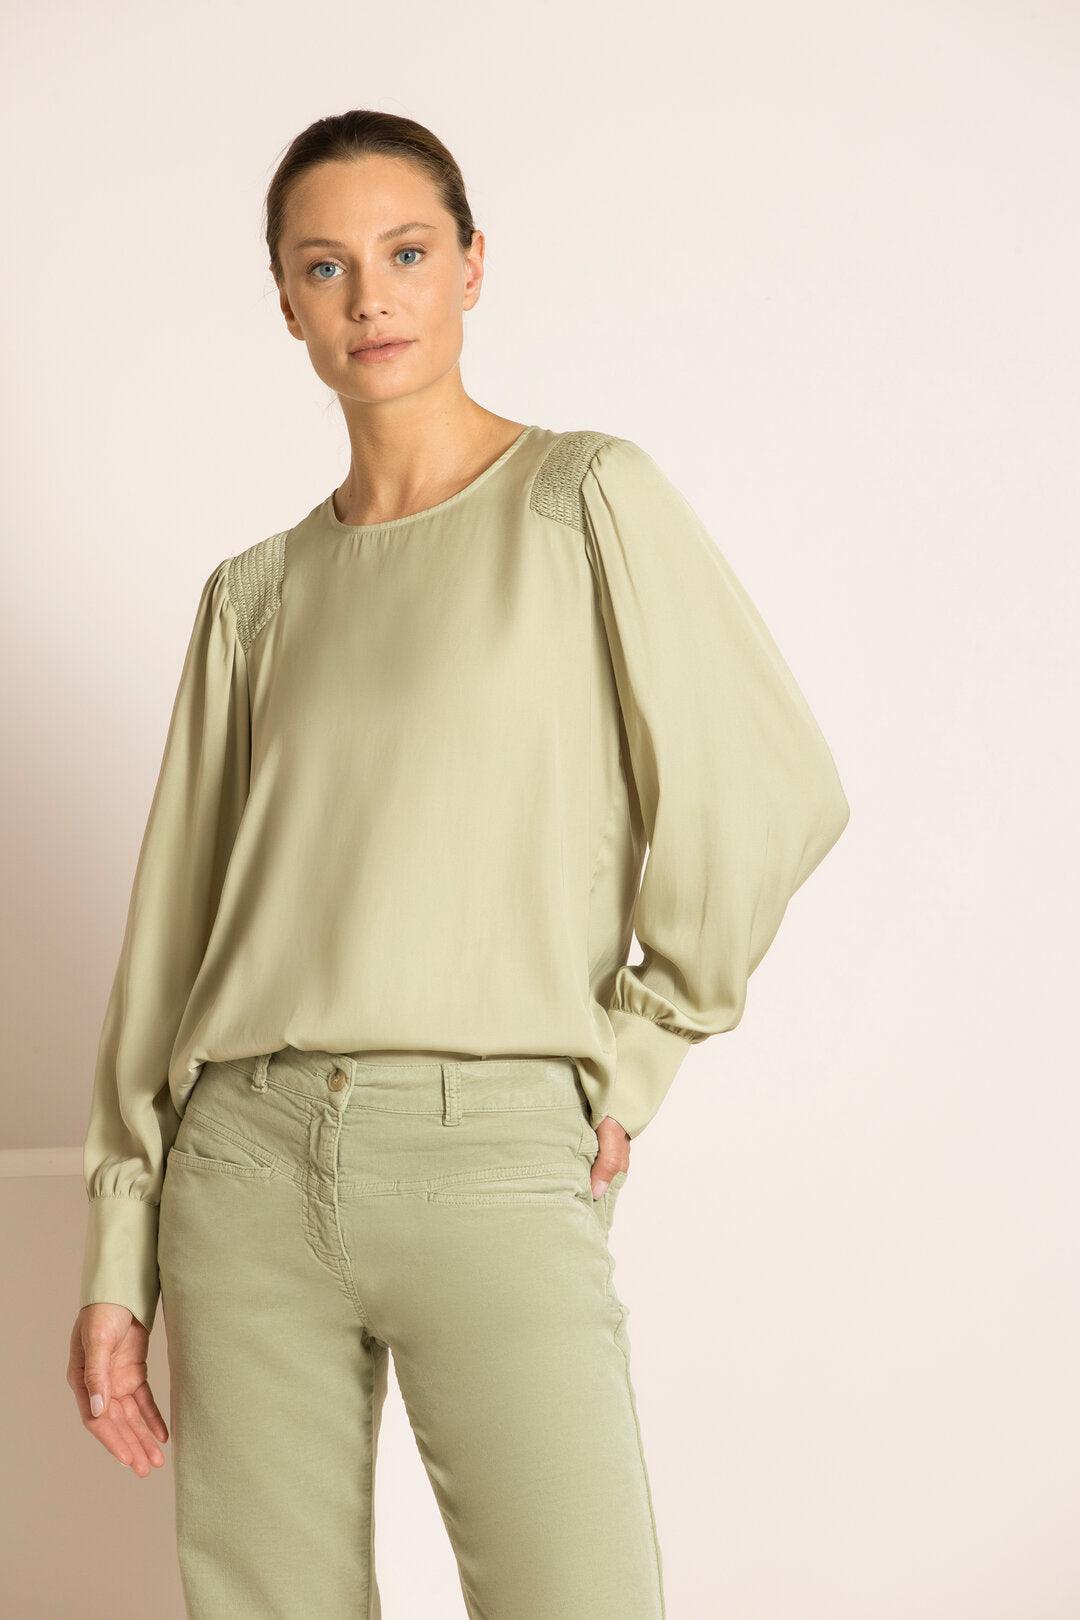 Bloes Groen Gigue ( Hana 720/550 ) - Delaere Womenswear